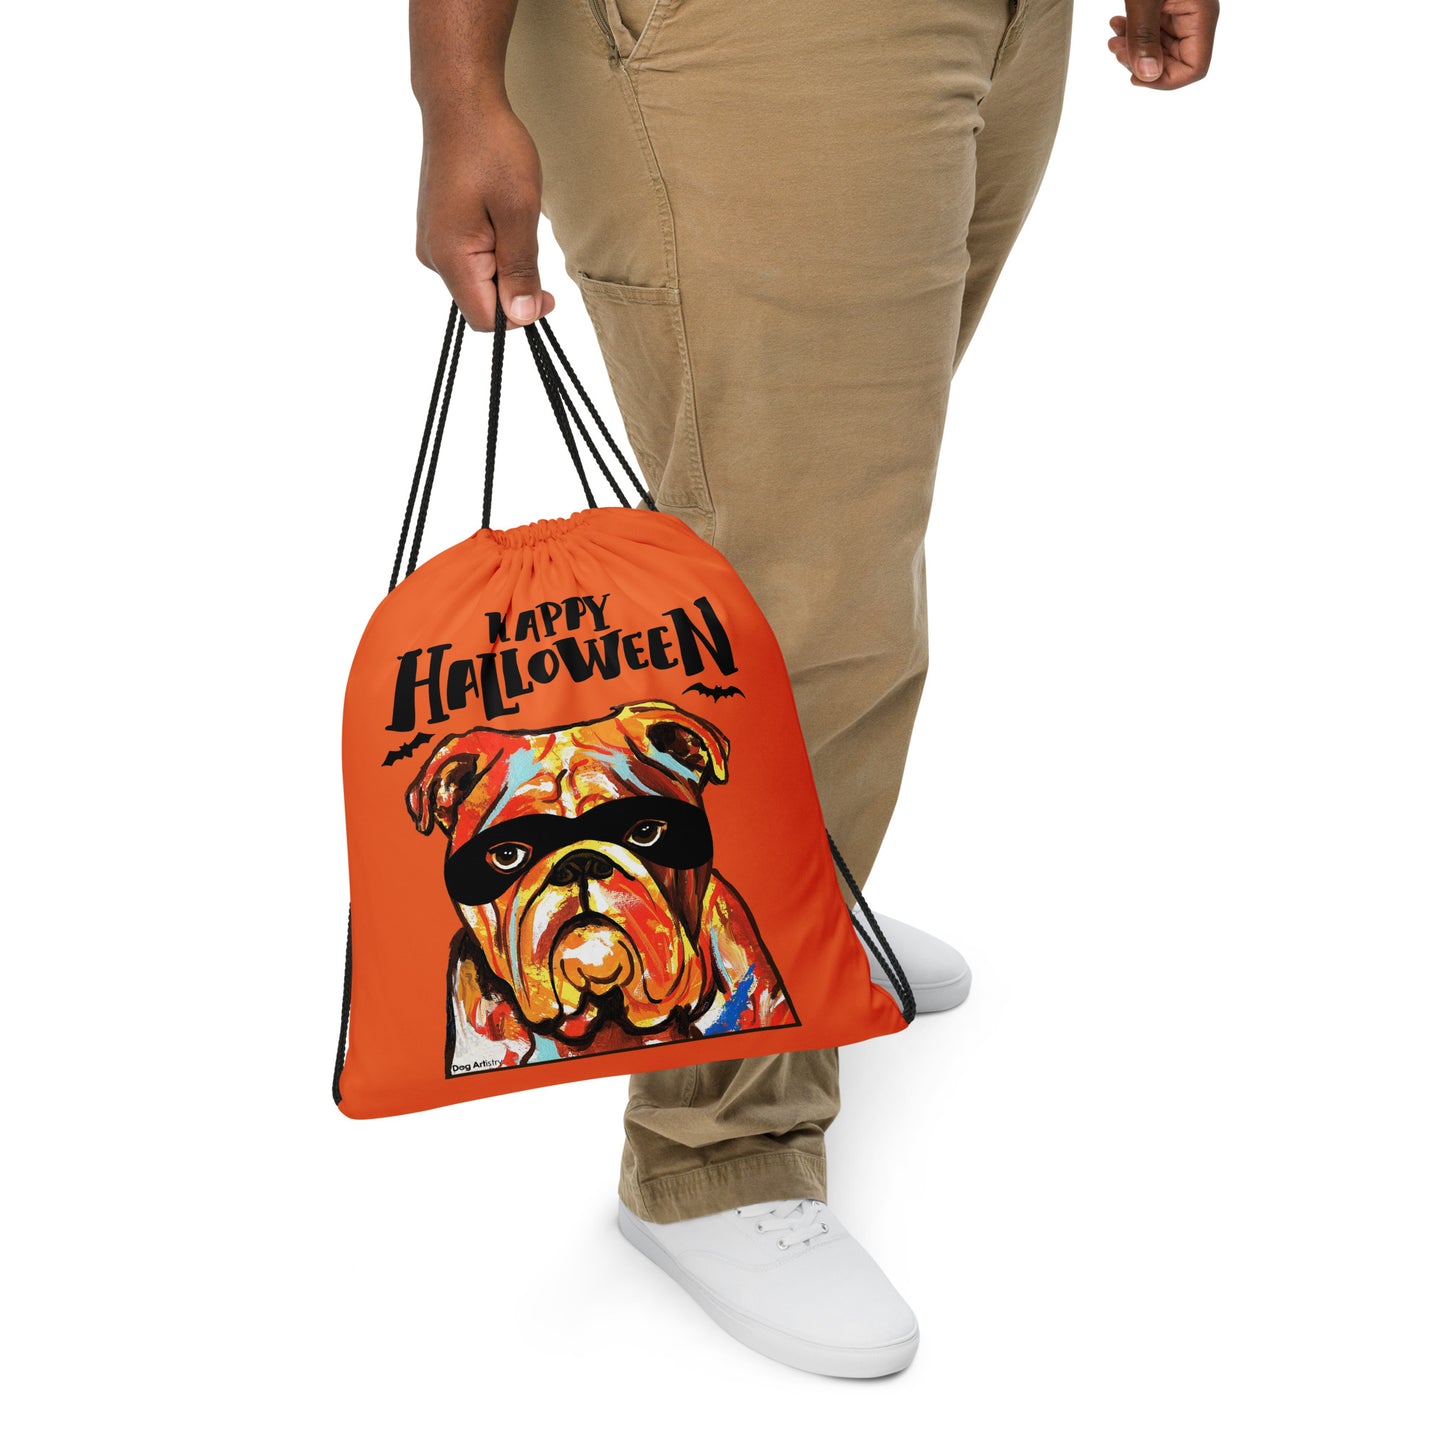 Happy Halloween English Bulldog wearing mask Orange drawstring bag by Dog Artistry Halloween candy bag. Funny dog Halloween bag.